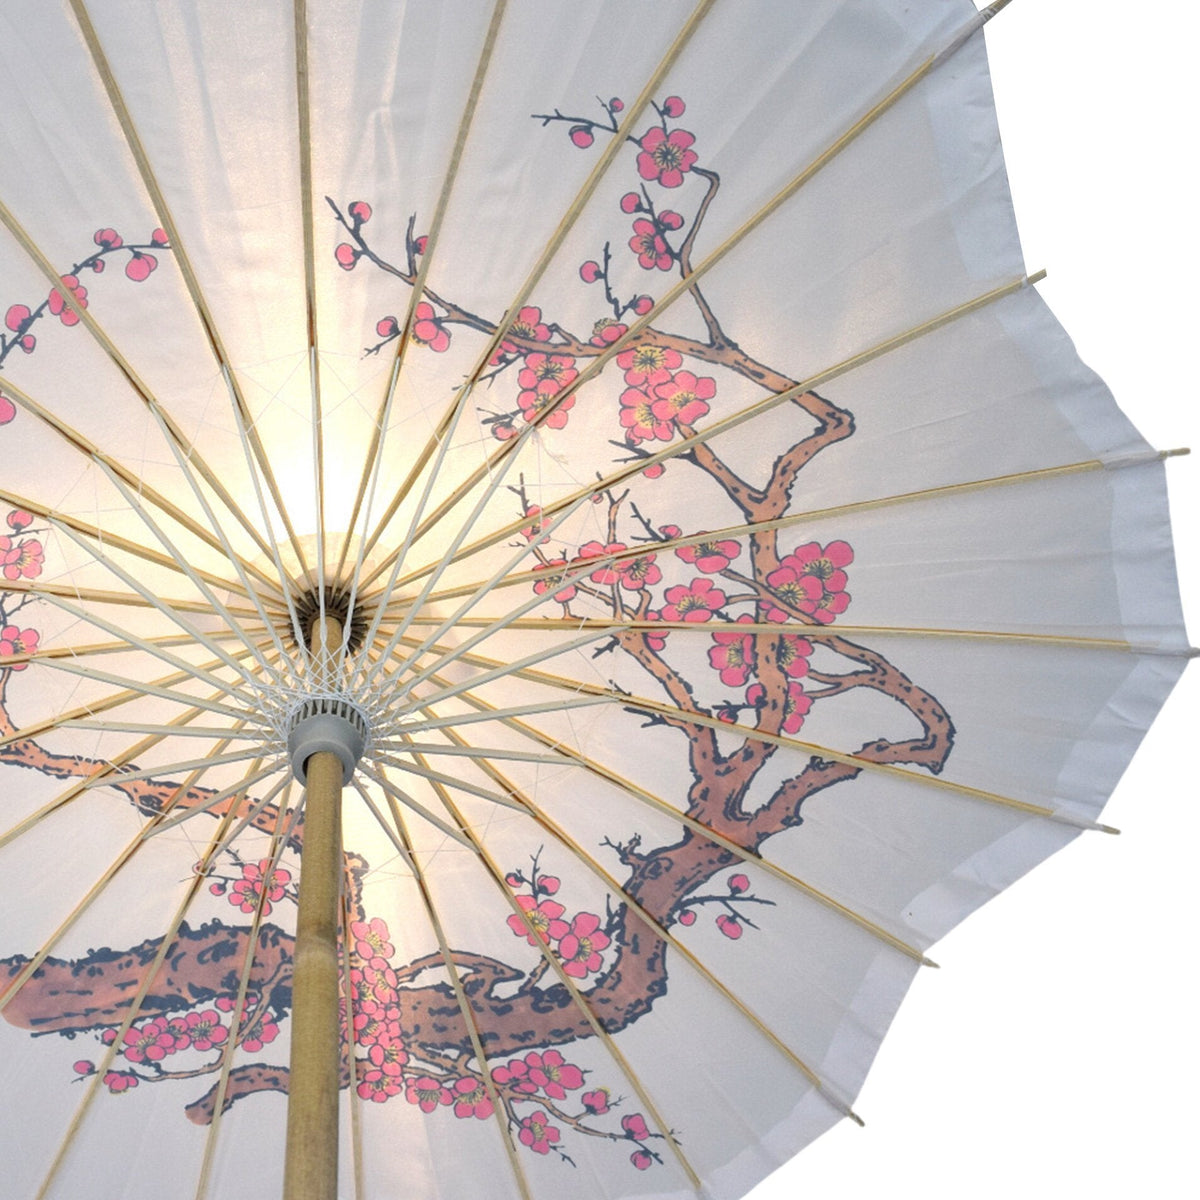 32 Inch Cherry Blossom Premium Nylon Parasol Umbrella, Scallop Shaped with Elegant Handle - Luna Bazaar | Boho &amp; Vintage Style Decor